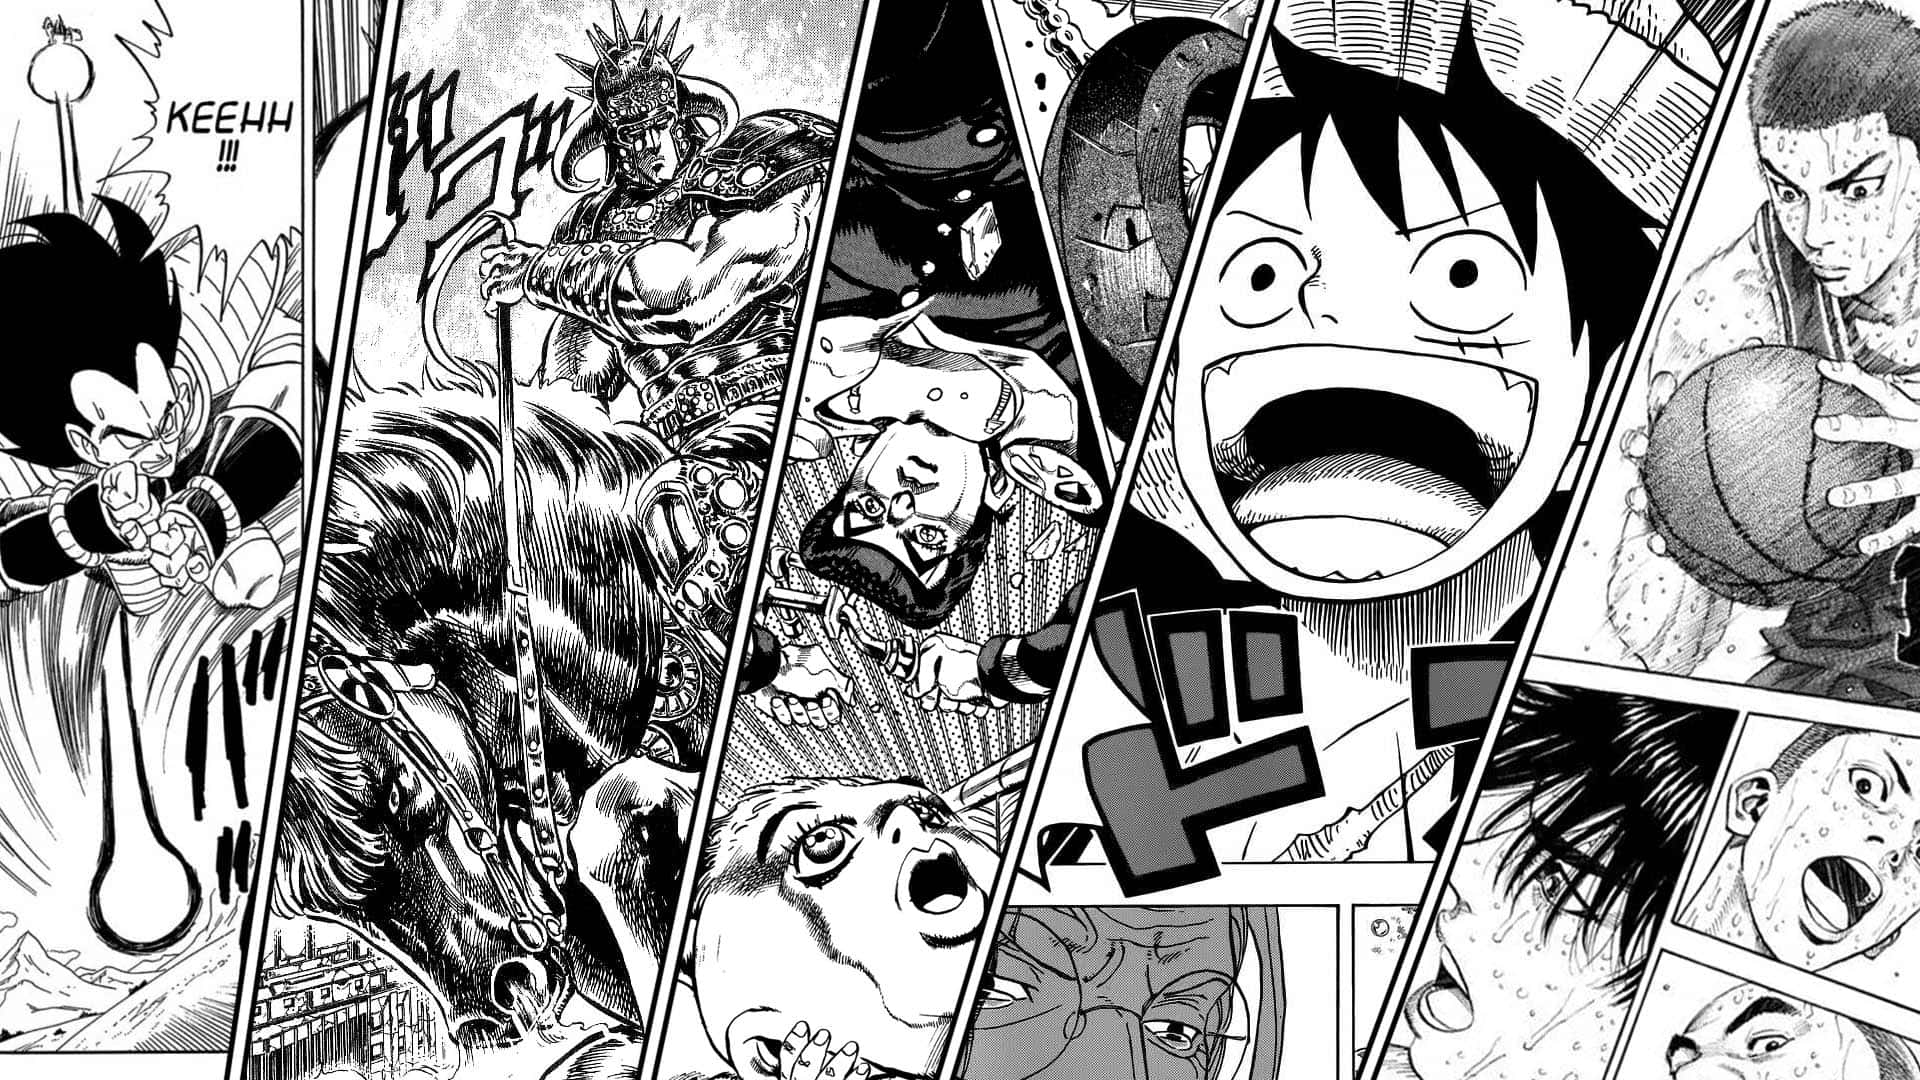 Download Enjoy a fun adventure with Manga Panel!